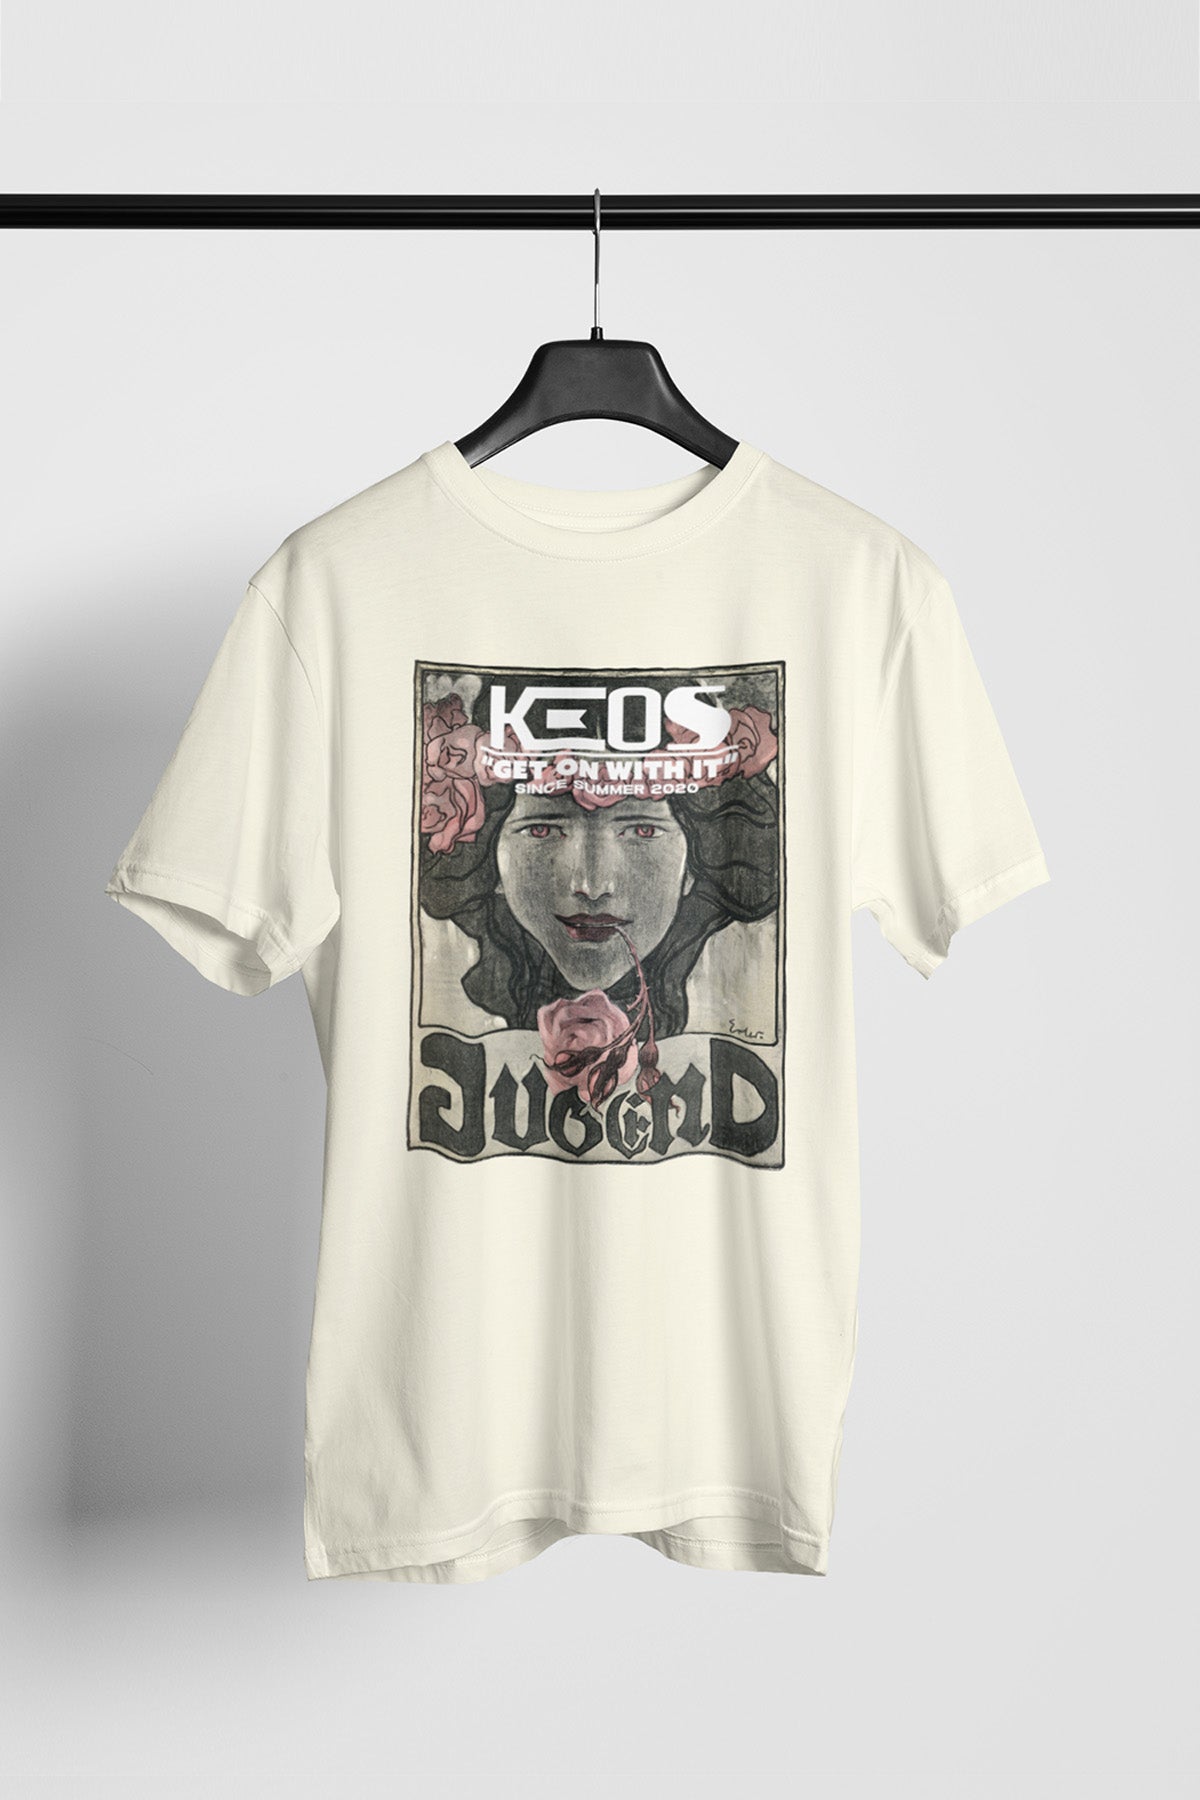 Jugend Organic Cotton T-shirt - keos.life